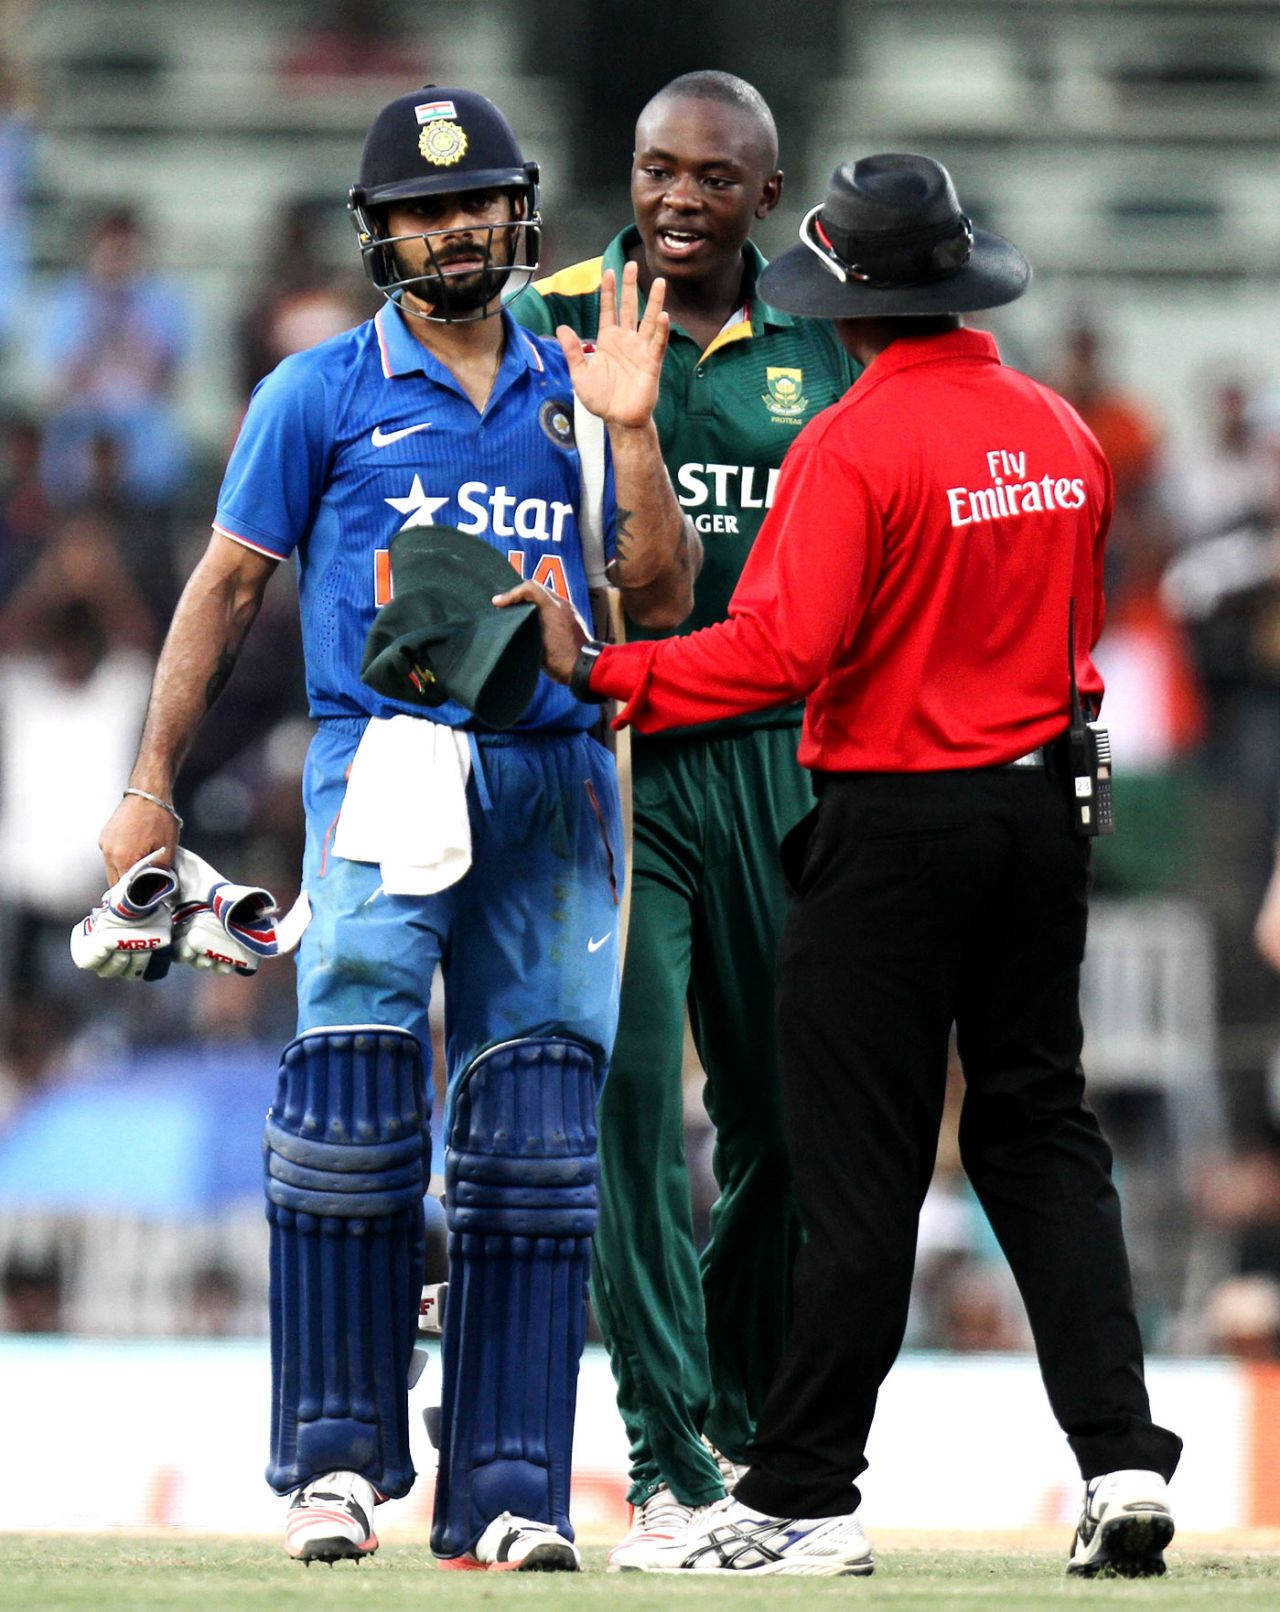 Kagiso Rabada congratulates Virat Kohli after dismissing him, India v South Africa, 4th ODI, Chennai, October 22, 2015